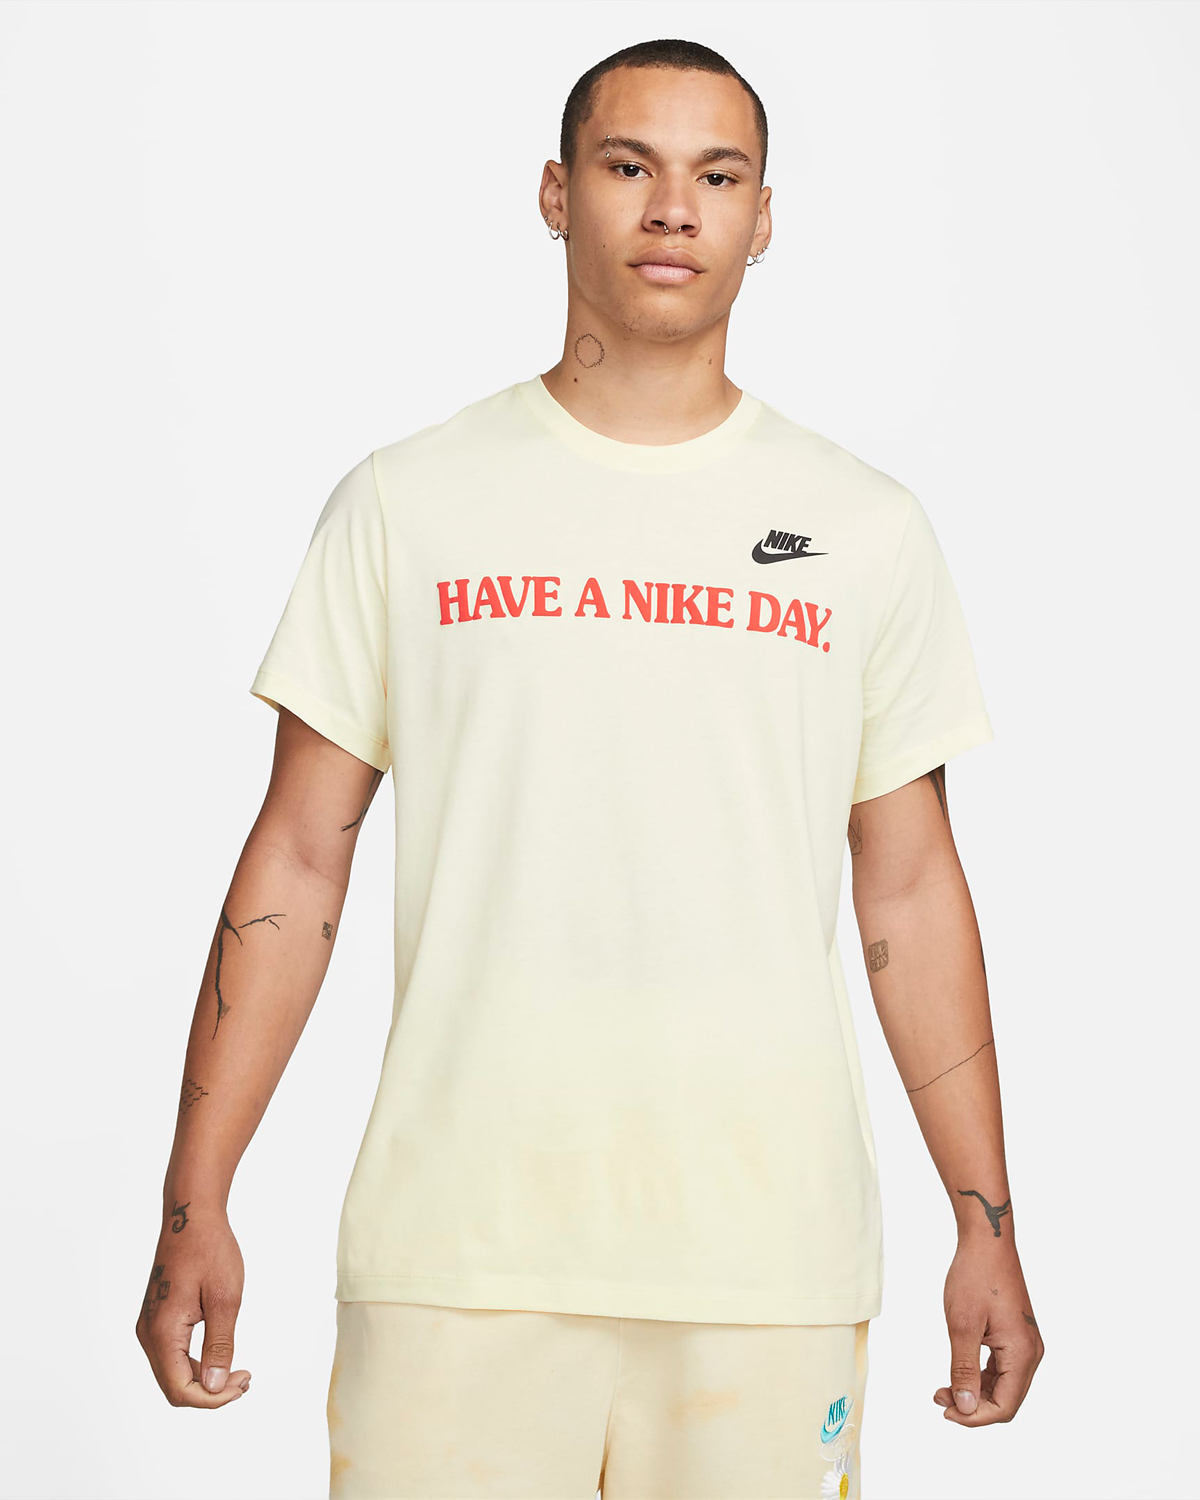 nike-day-t-shirt-coconut-milk-1